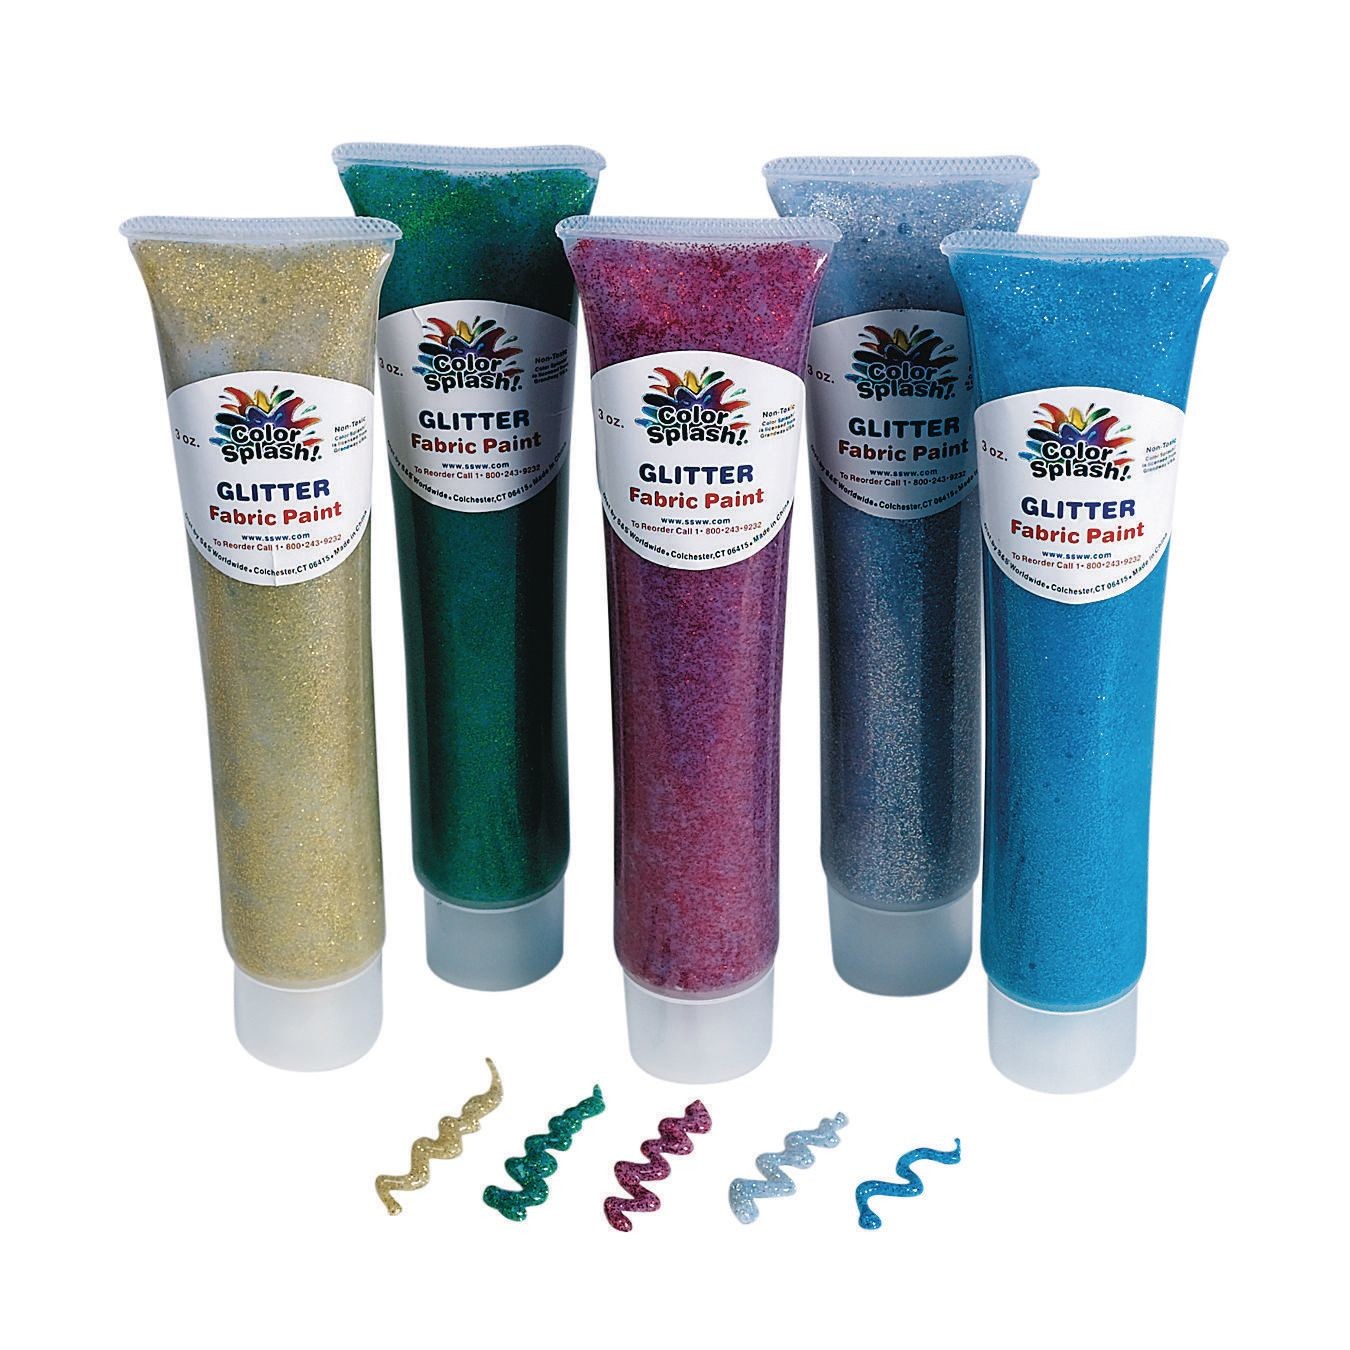 Color Splash 3-oz. Glitter Fabric Paint Set, Price/Set of 5